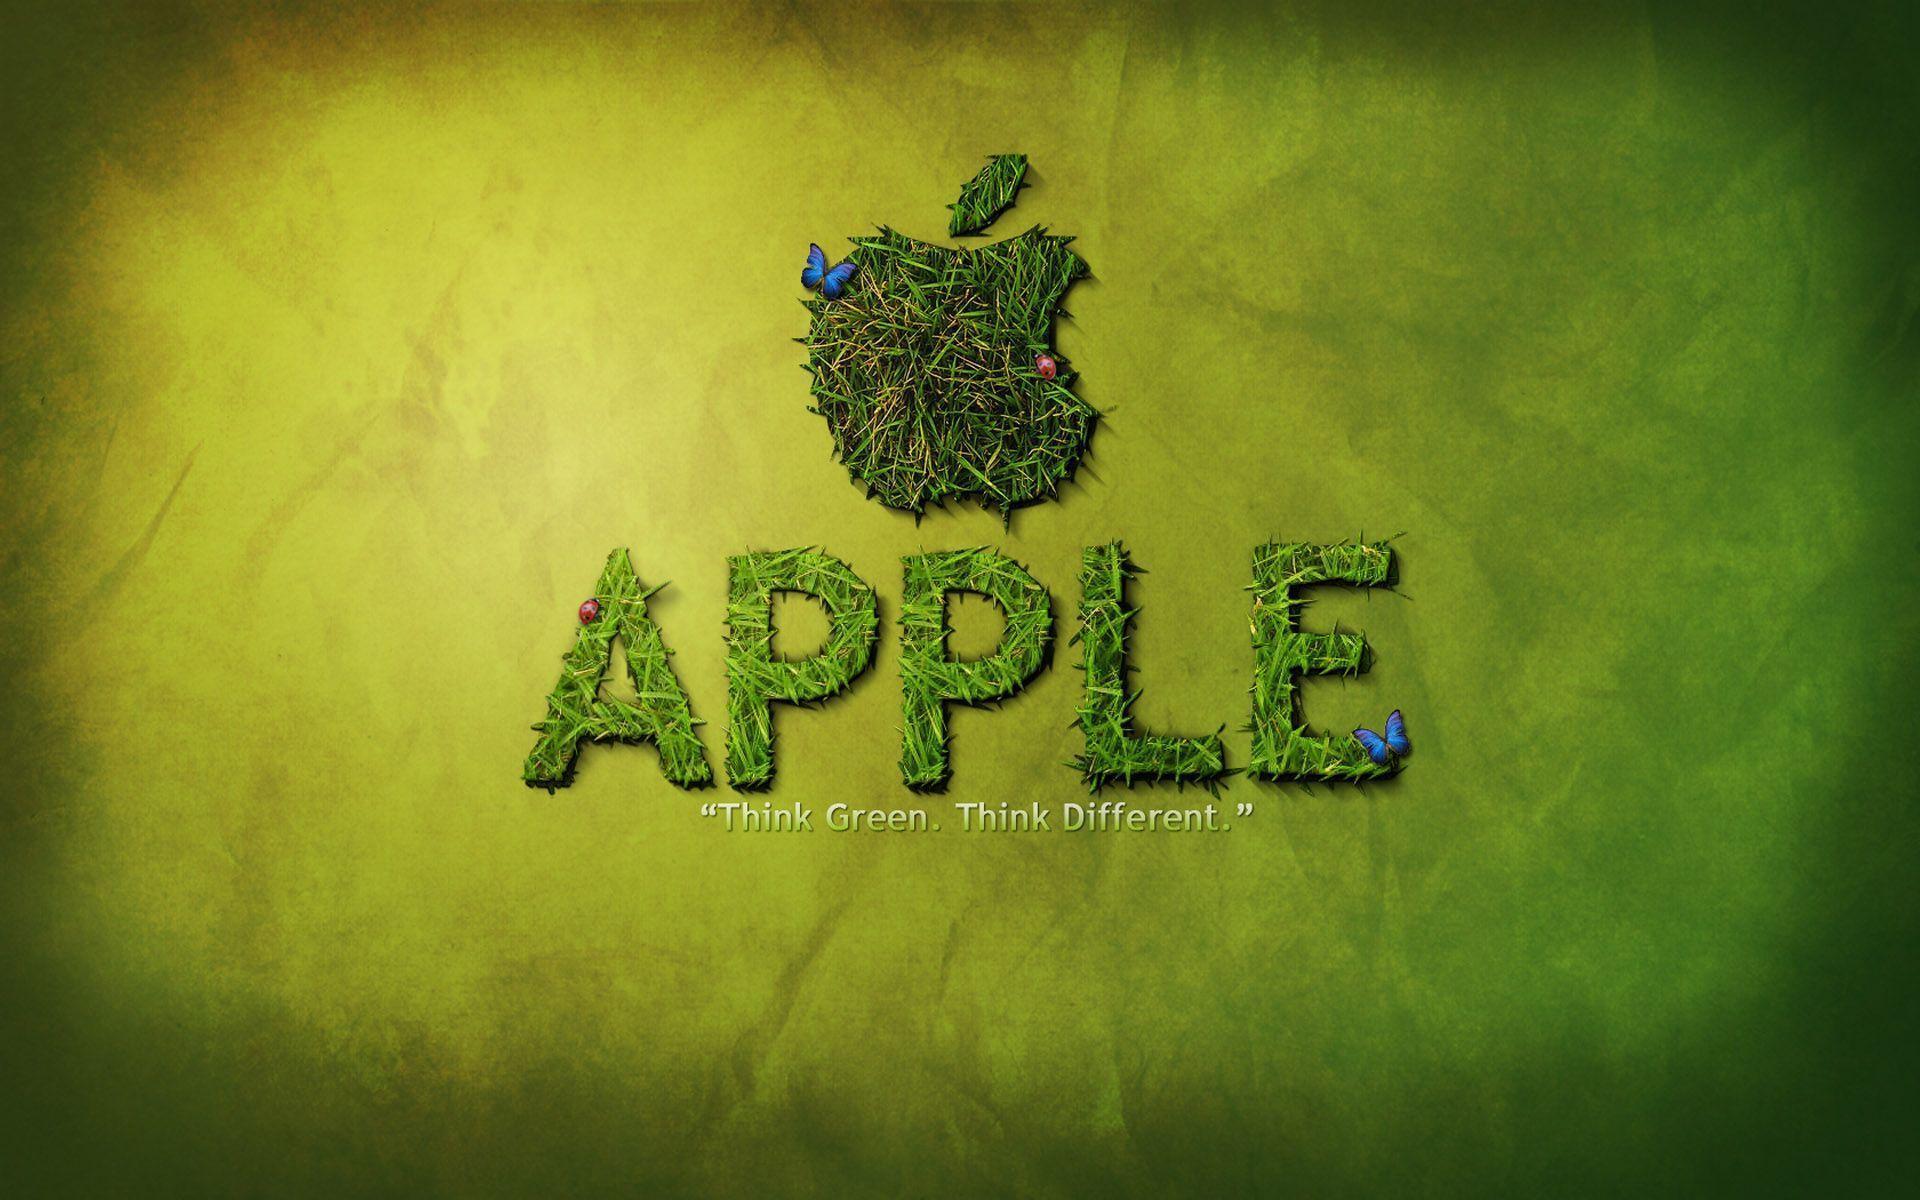 Green Apple wallpaper